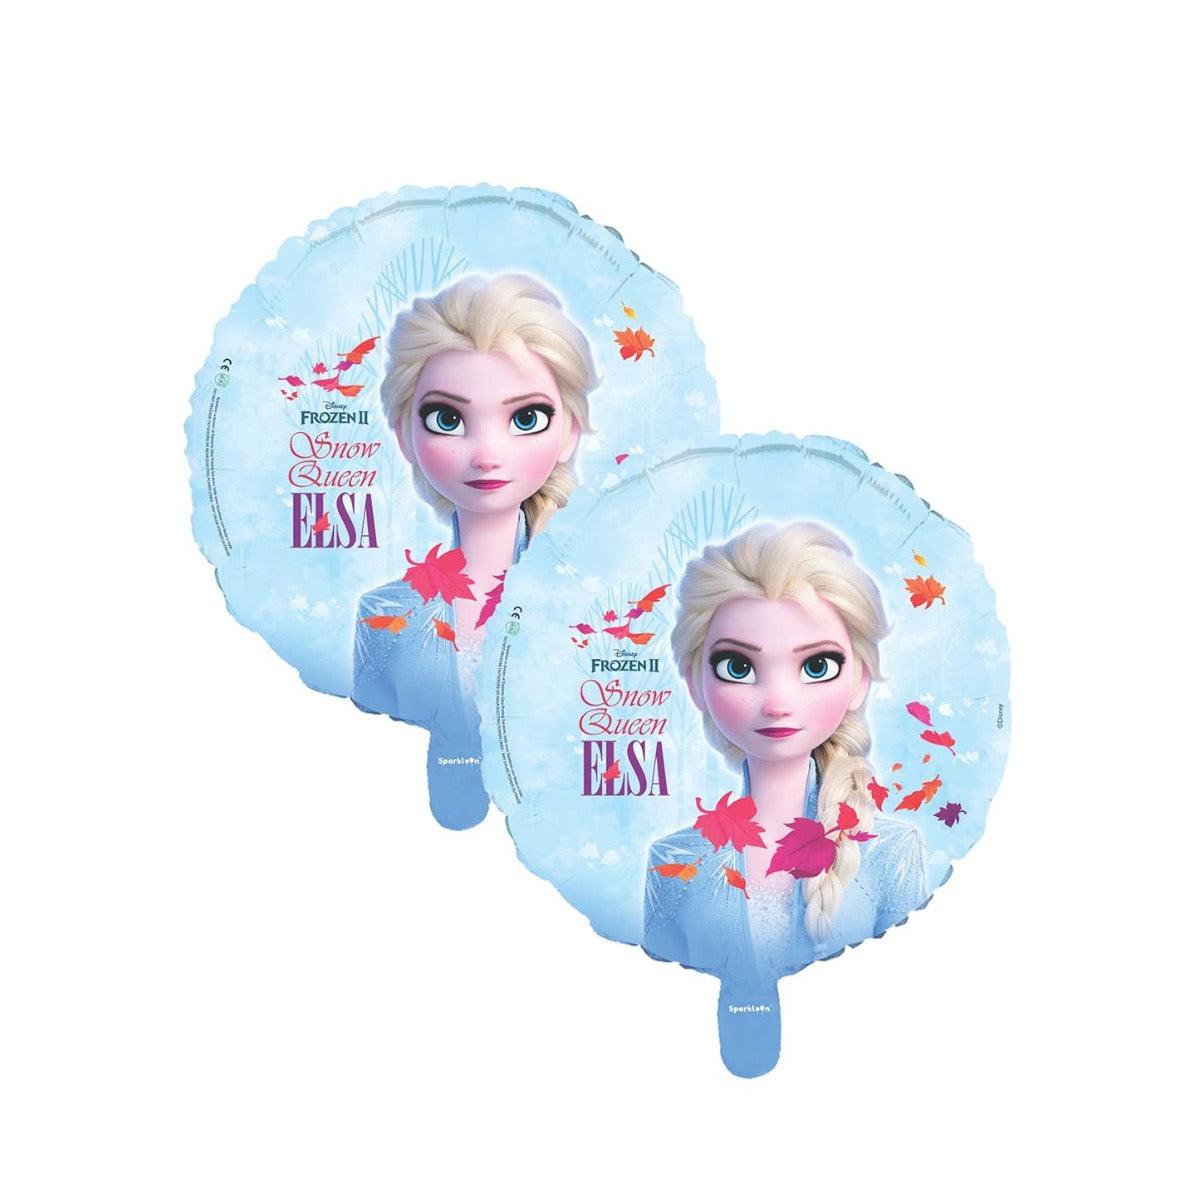 Disney Frozen Elsa the Snow Queen Round Foil Balloon, Pack of 2